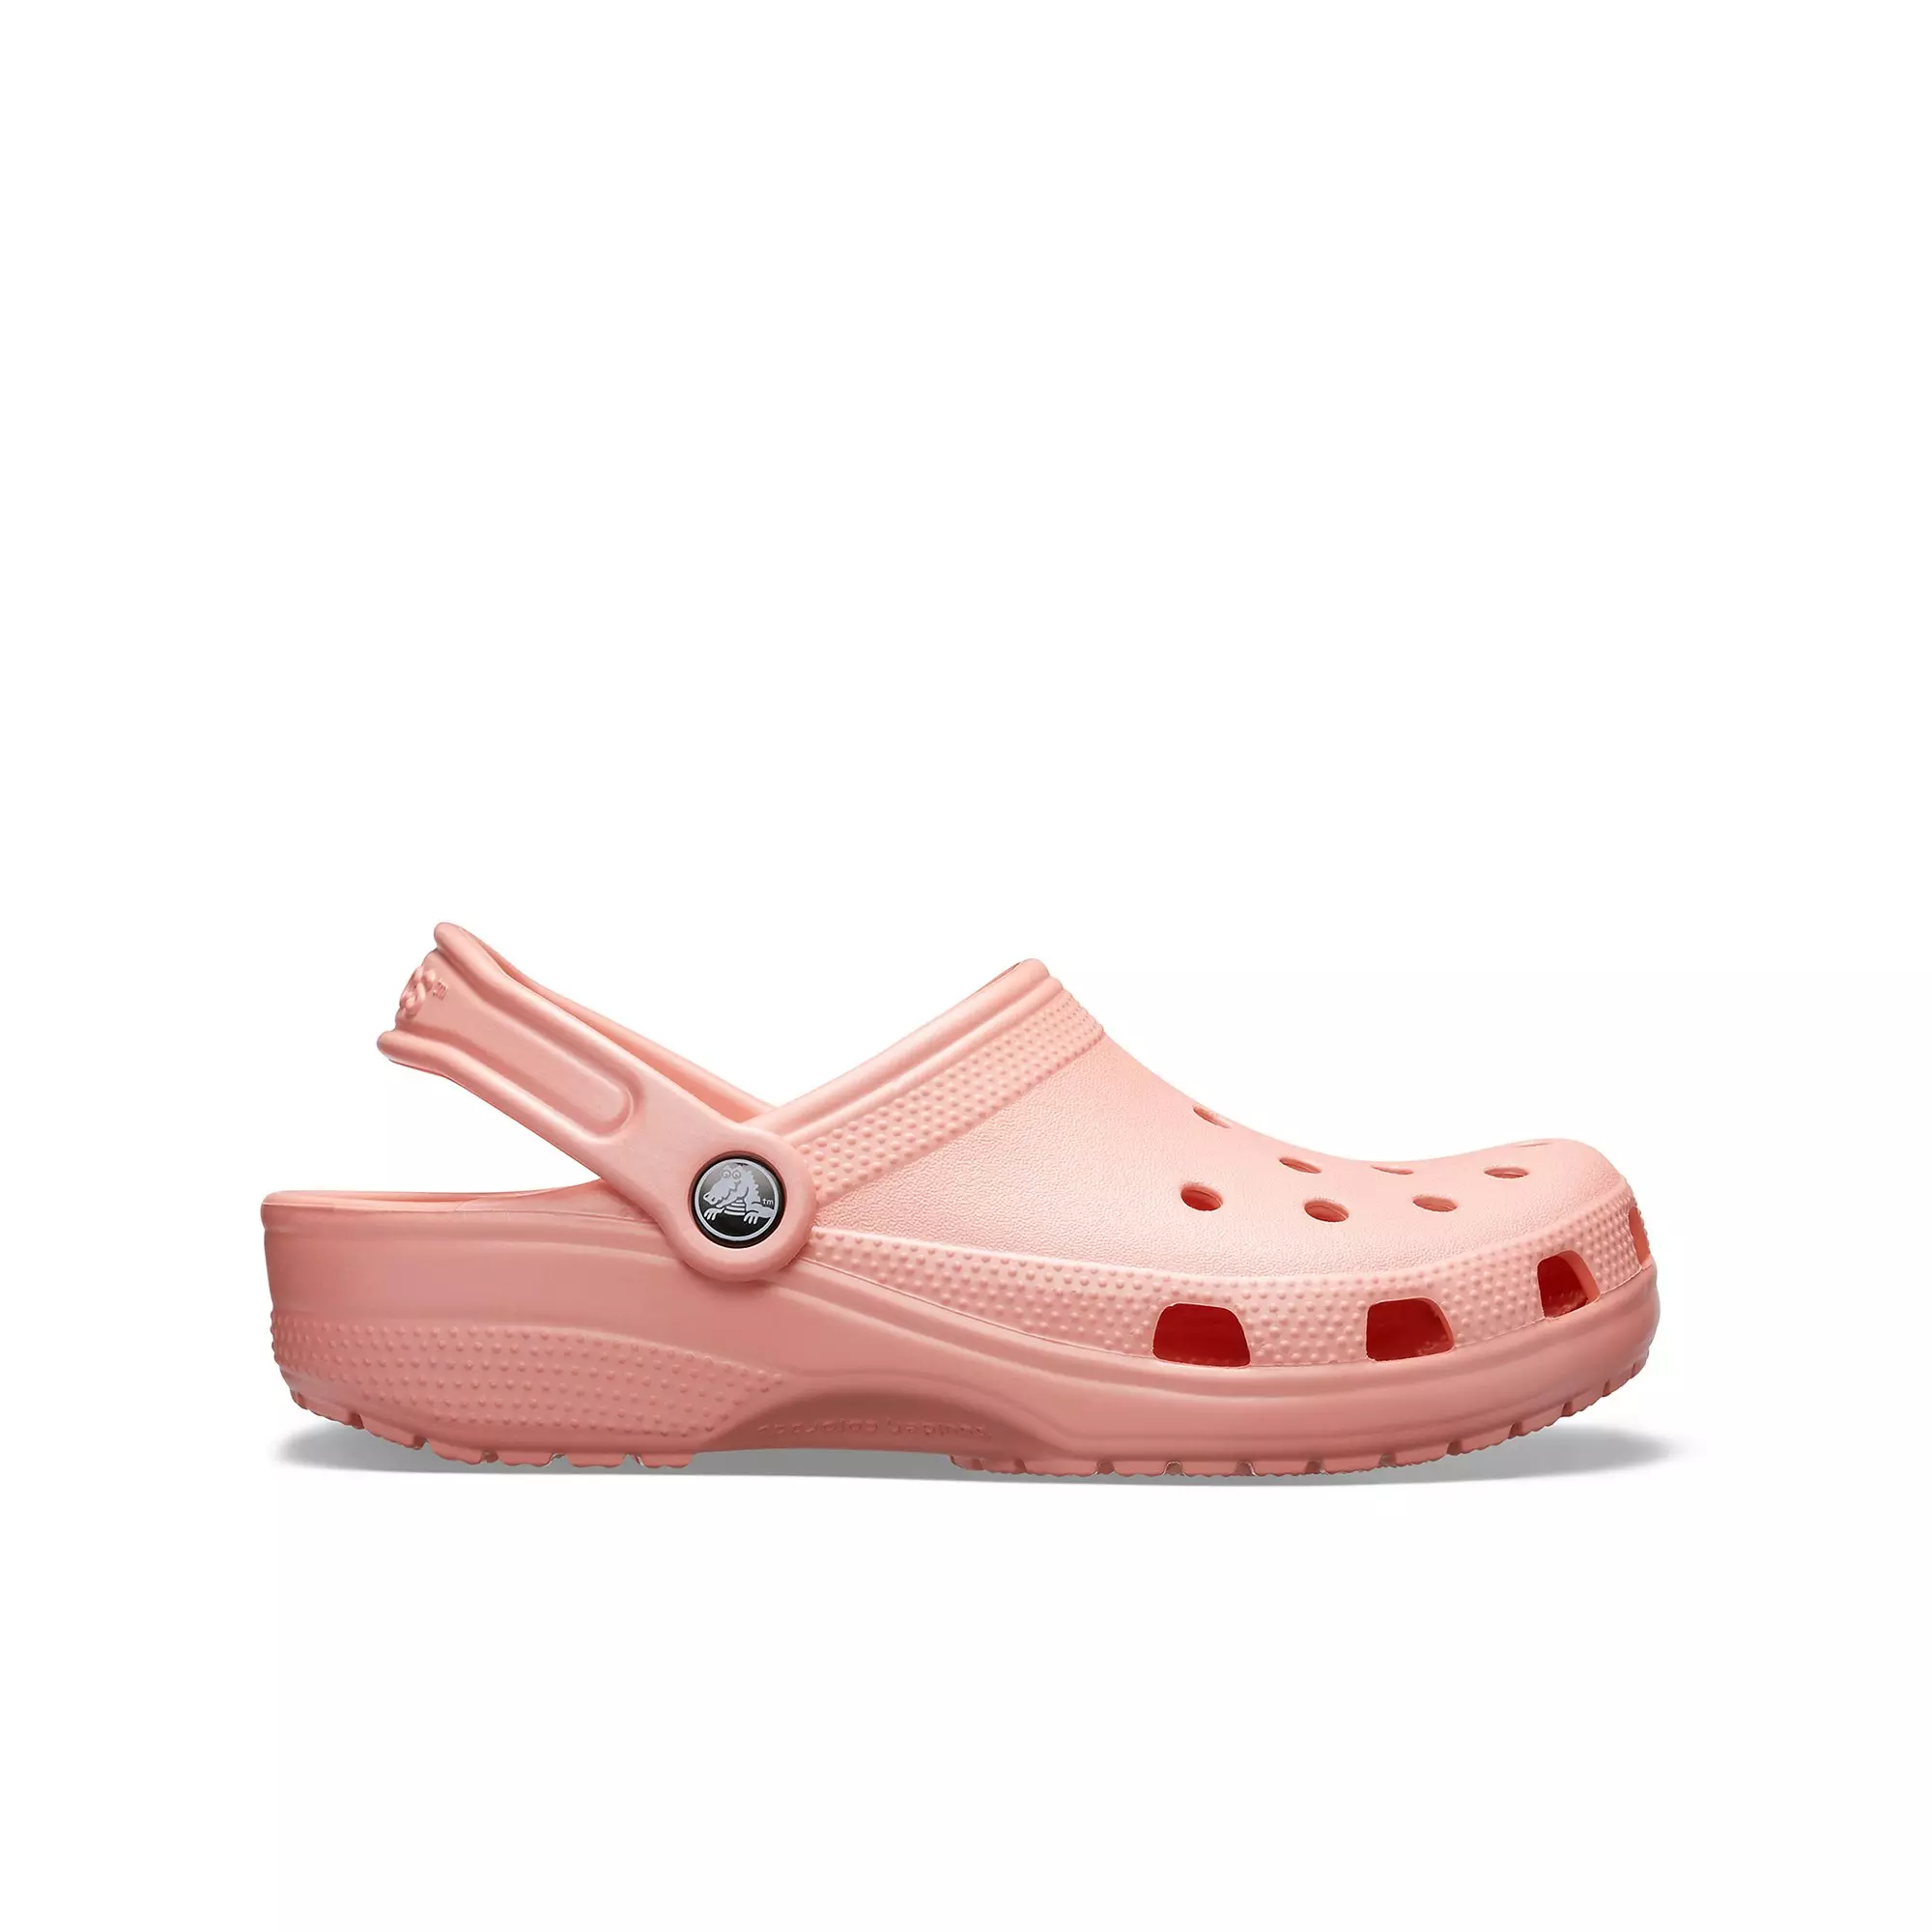 Crocs Women’s peach clog slip on shoe size 6 Women’s